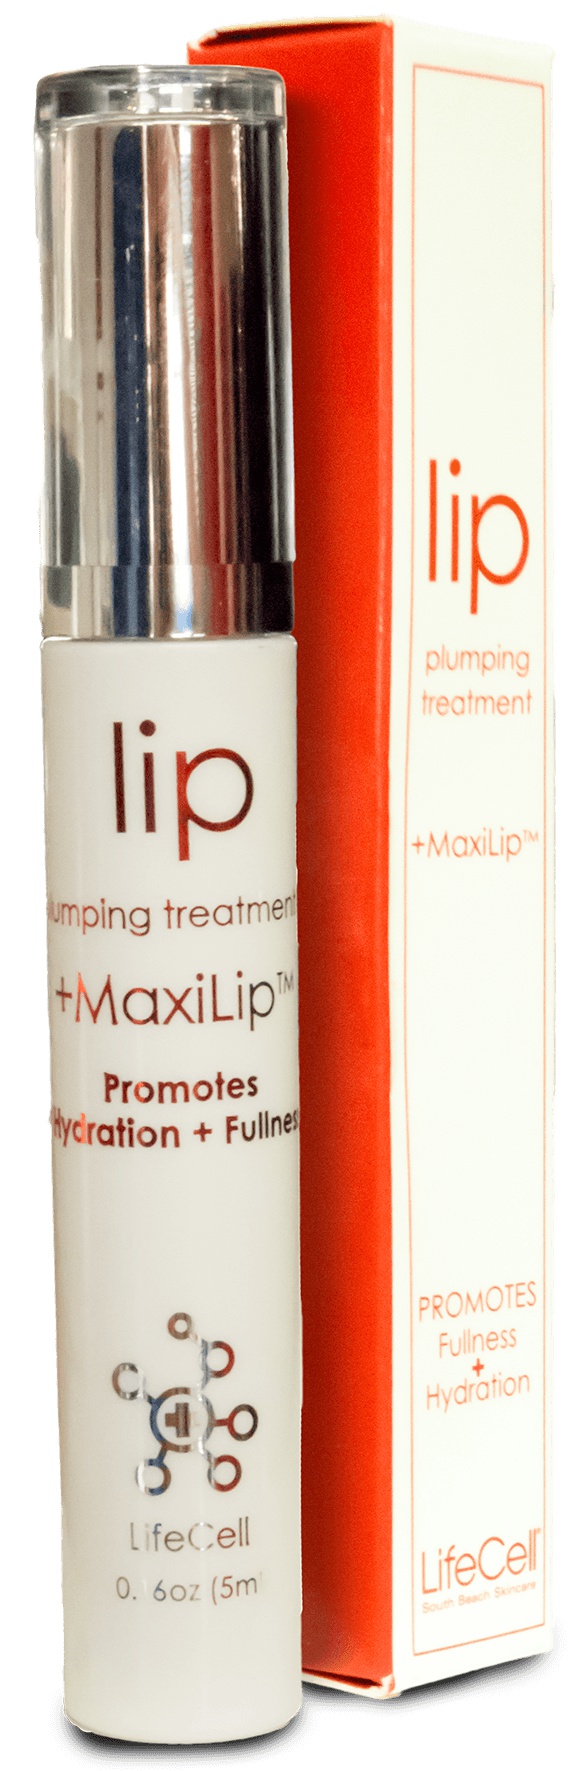 LifeCell Lip Plumping Treatment + Maxilip